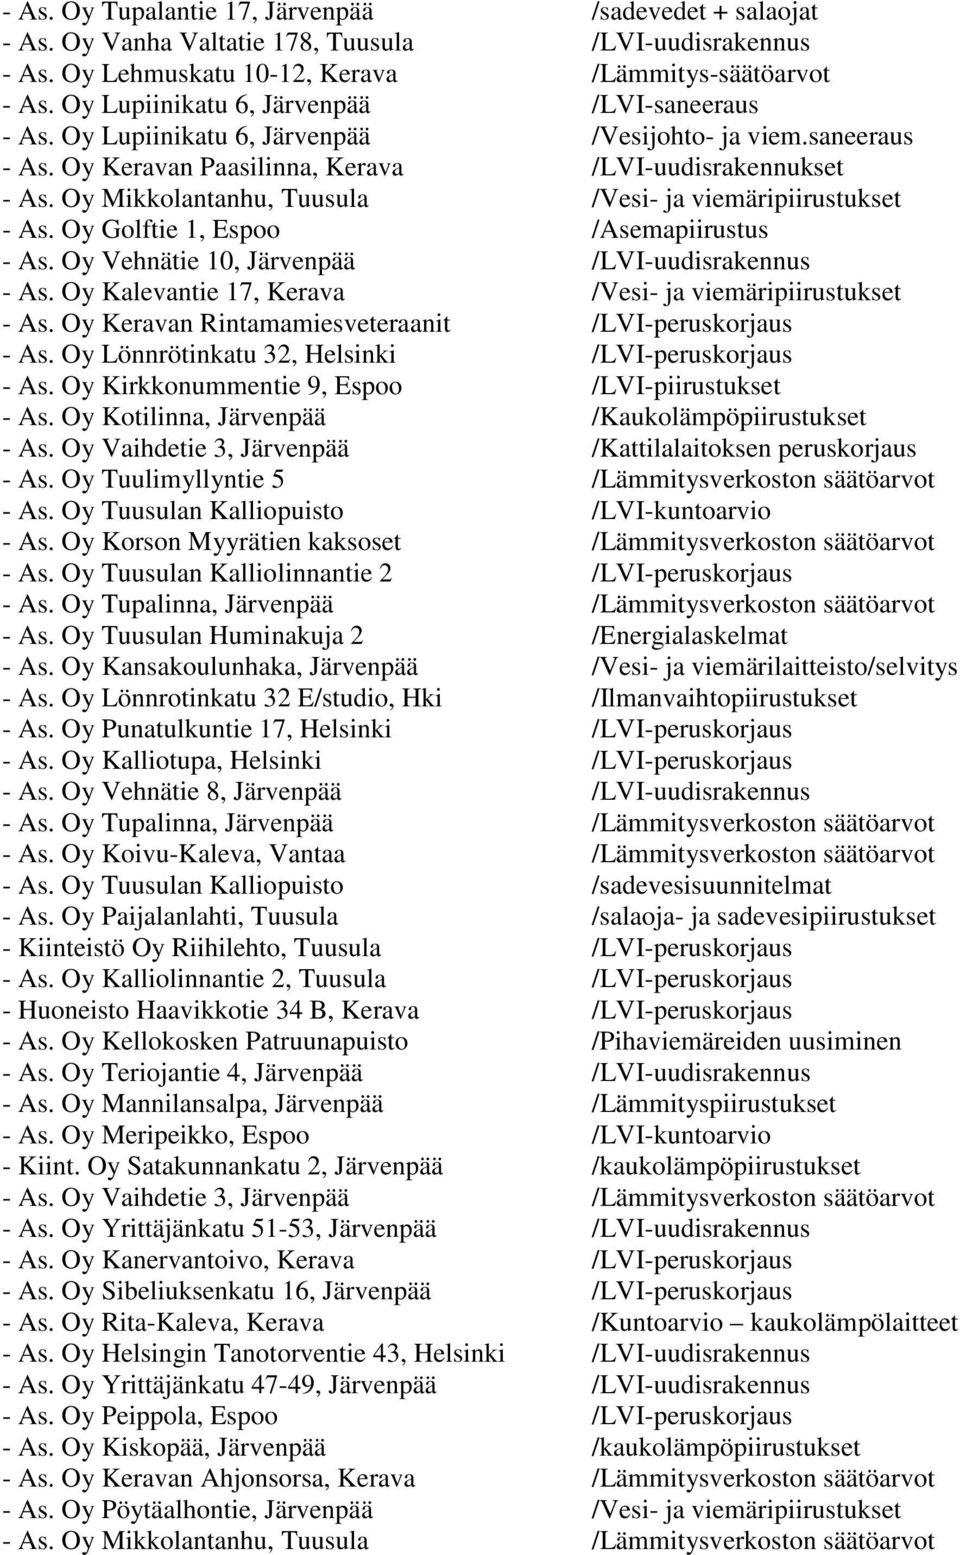 Oy Mikkolantanhu, Tuusula /Vesi- ja viemäripiirustukset - As. Oy Golftie 1, Espoo /Asemapiirustus - As. Oy Vehnätie 10, Järvenpää /LVI-uudisrakennus - As.